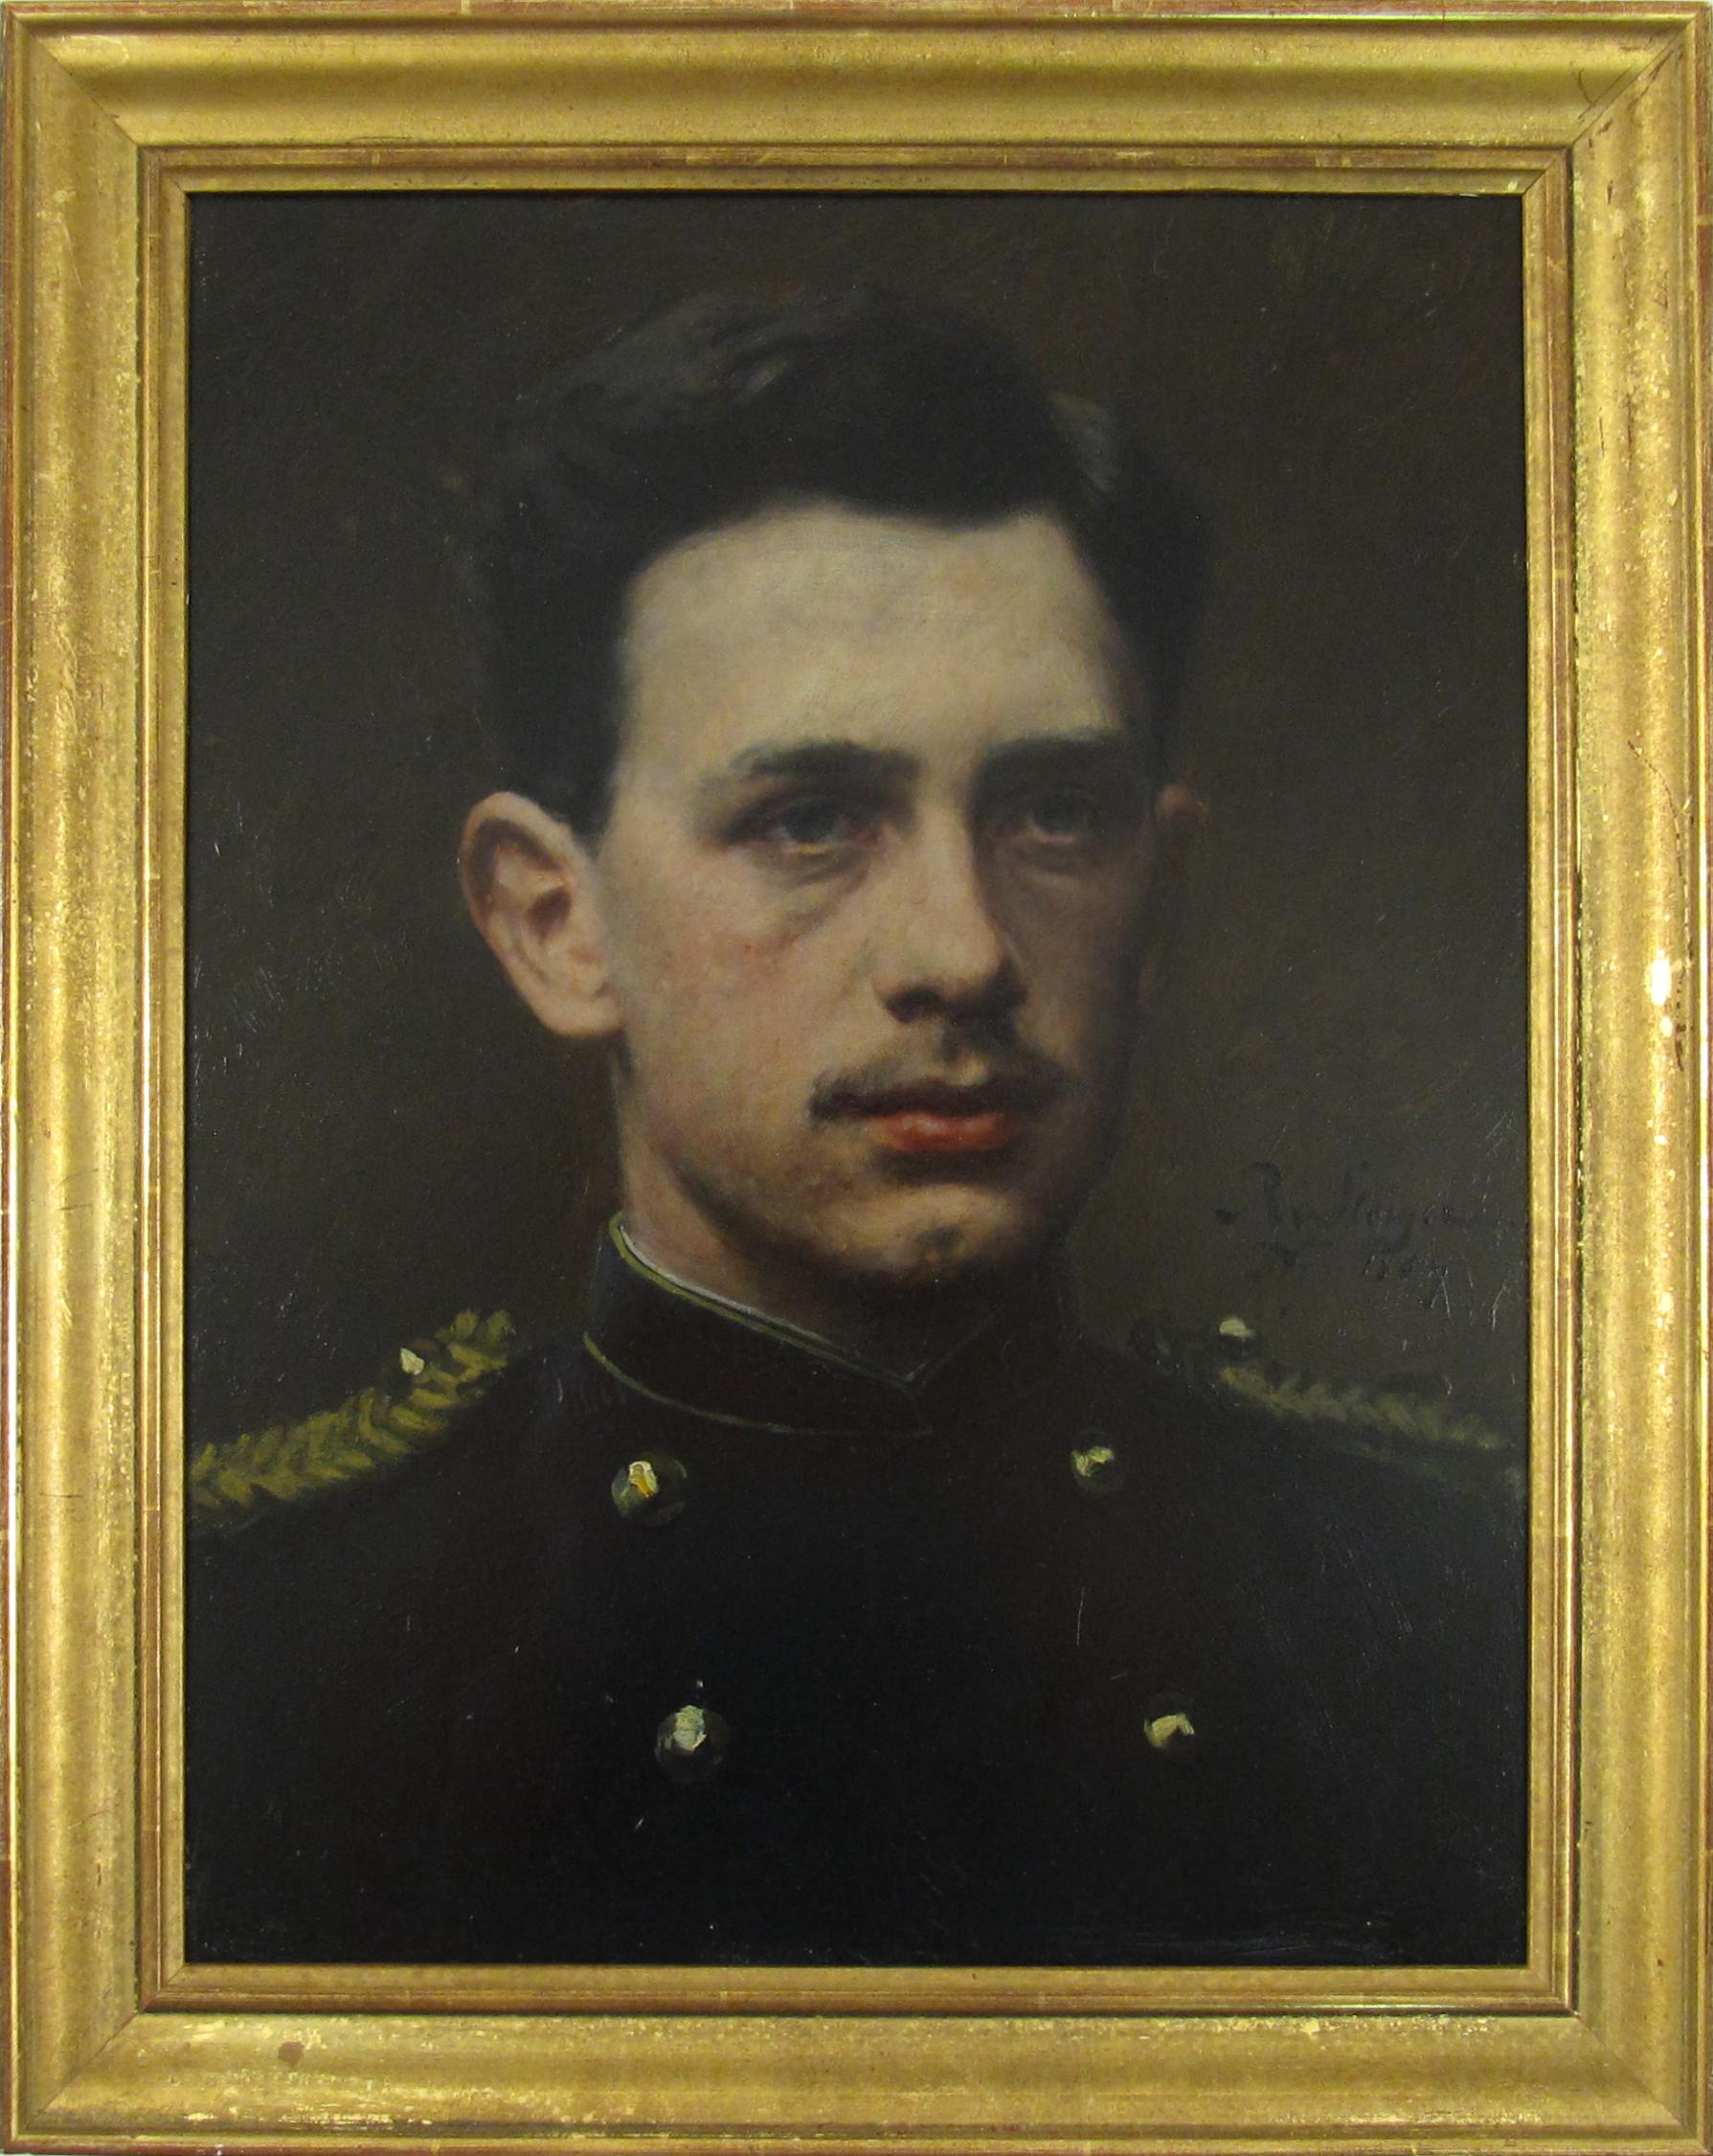 Portrait Painting Johann Ludwig Robert von Steiger - Robert von Steiger (1856-1941) Portrait de l'officier néerlandais A. v. Steiger, 1884, Hollande